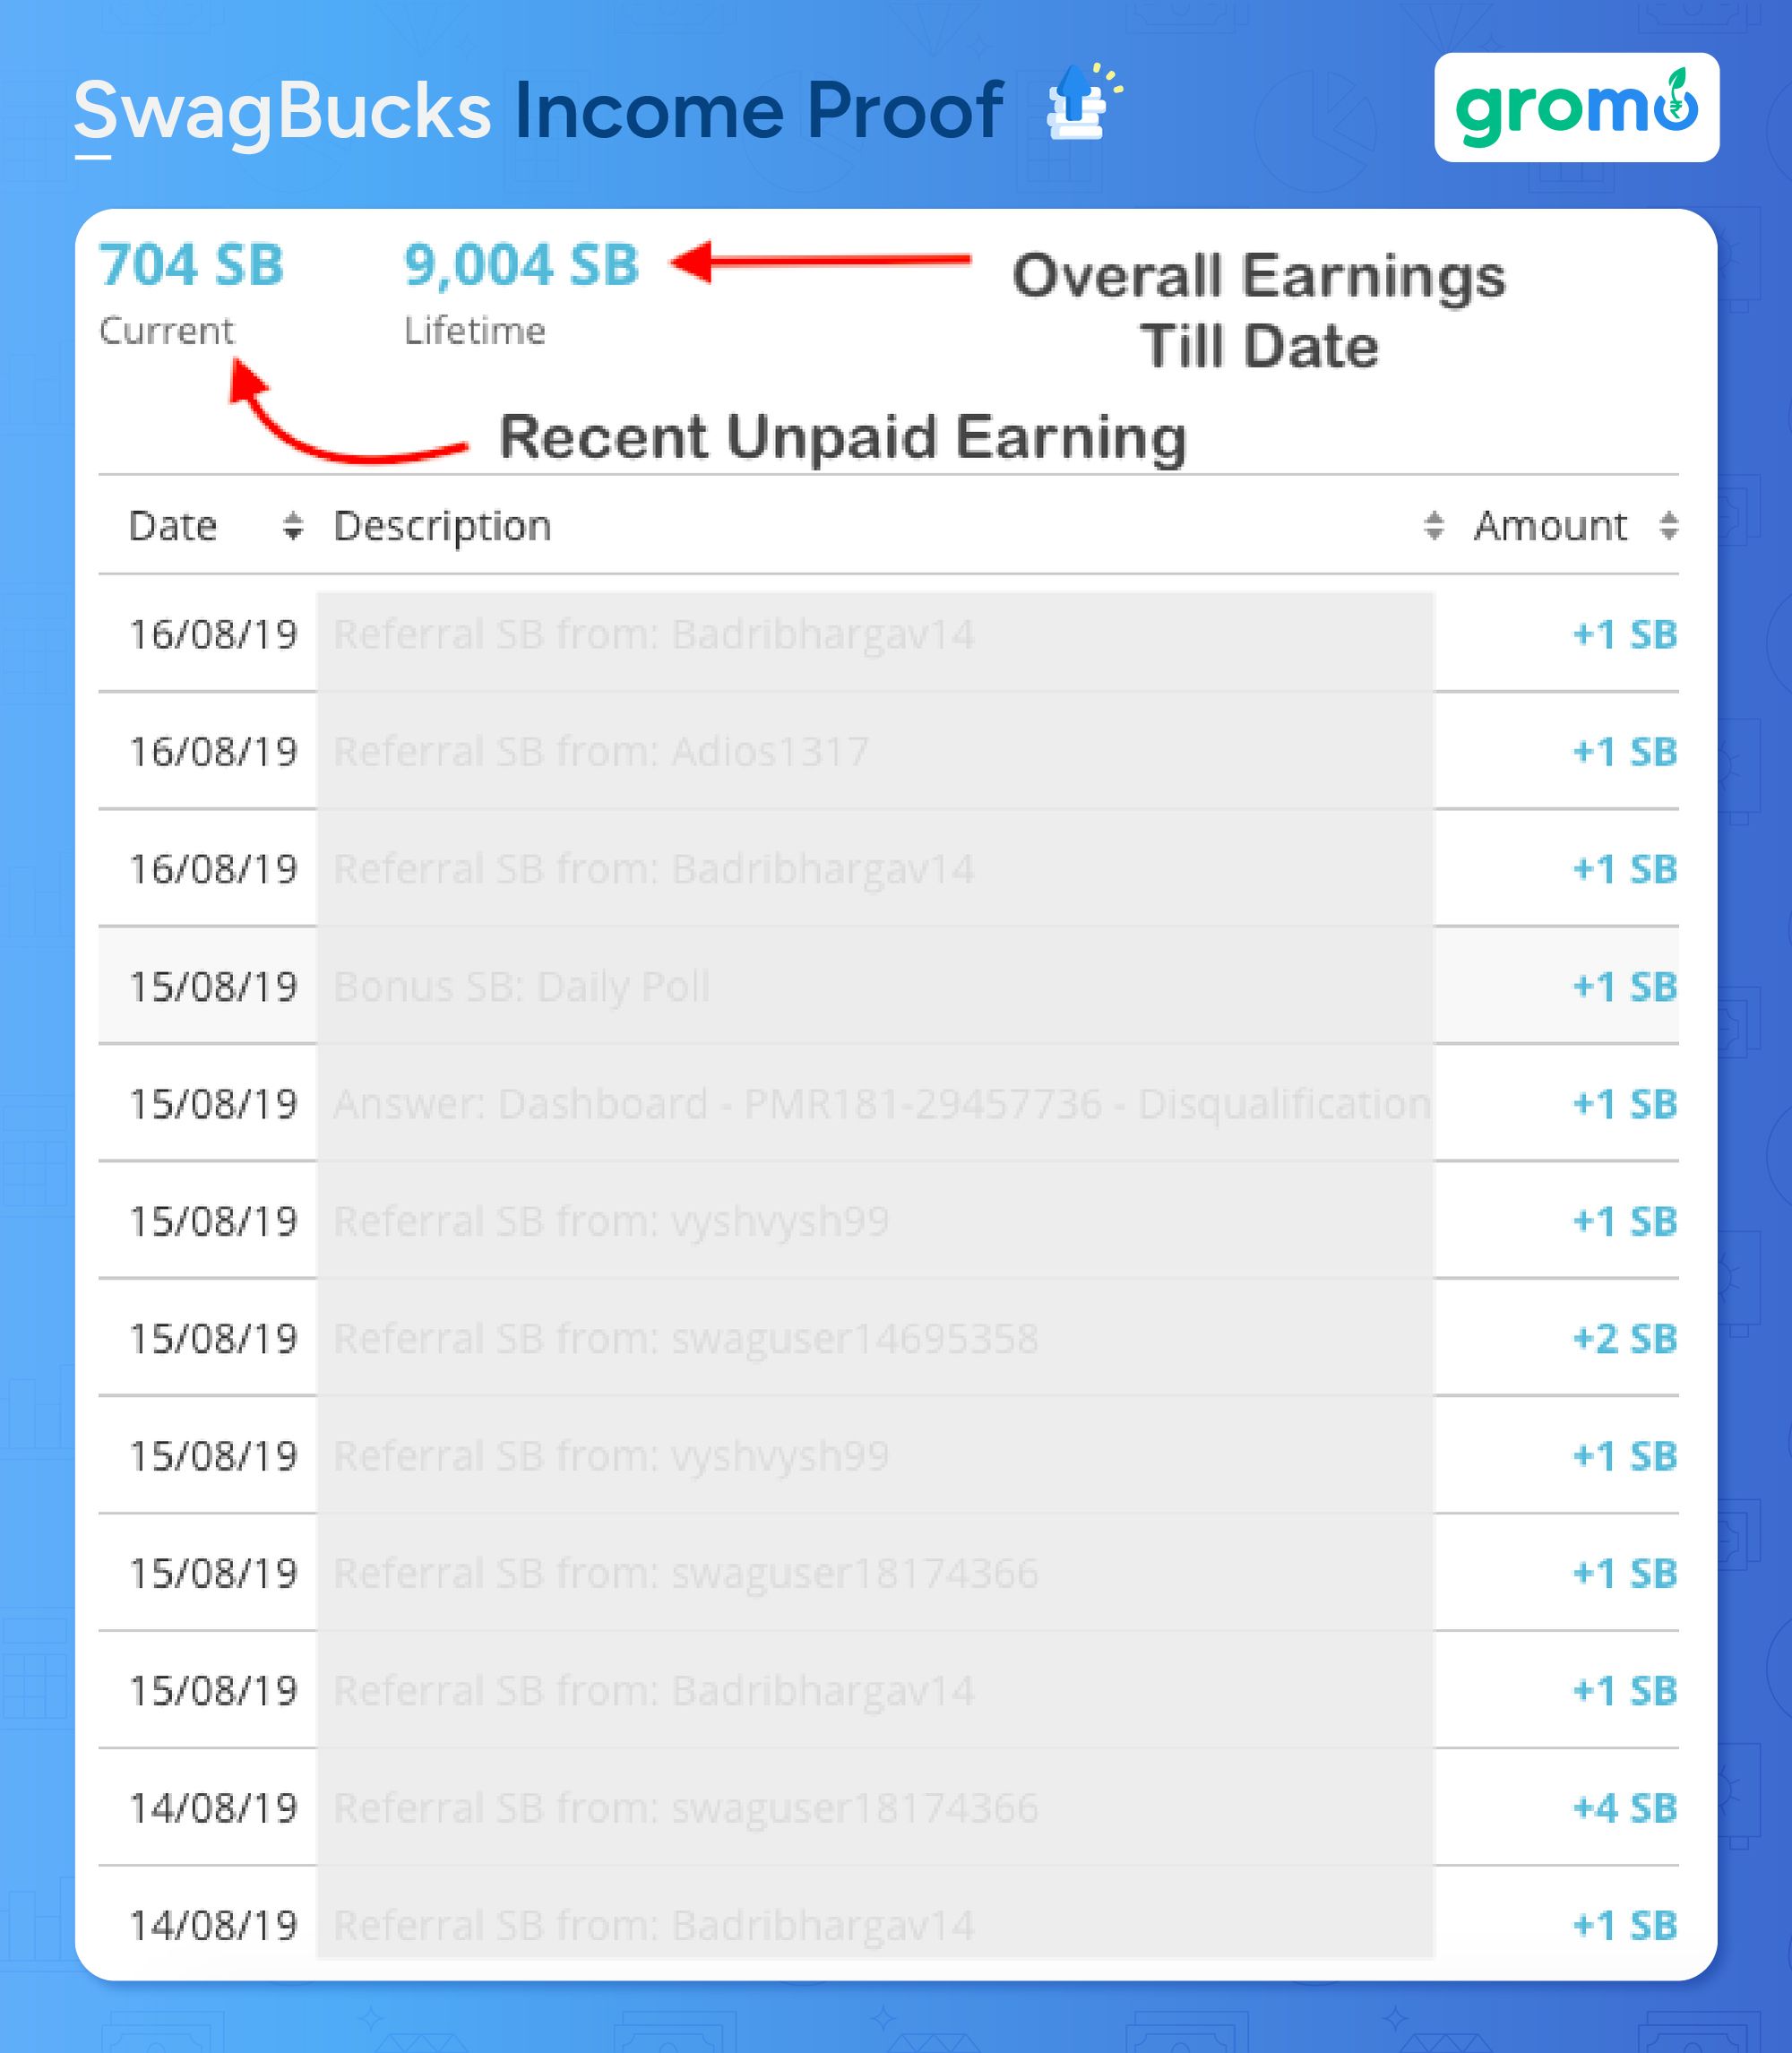 Swagbucks Income Proof - Best Ways to Make Money Online - GroMo